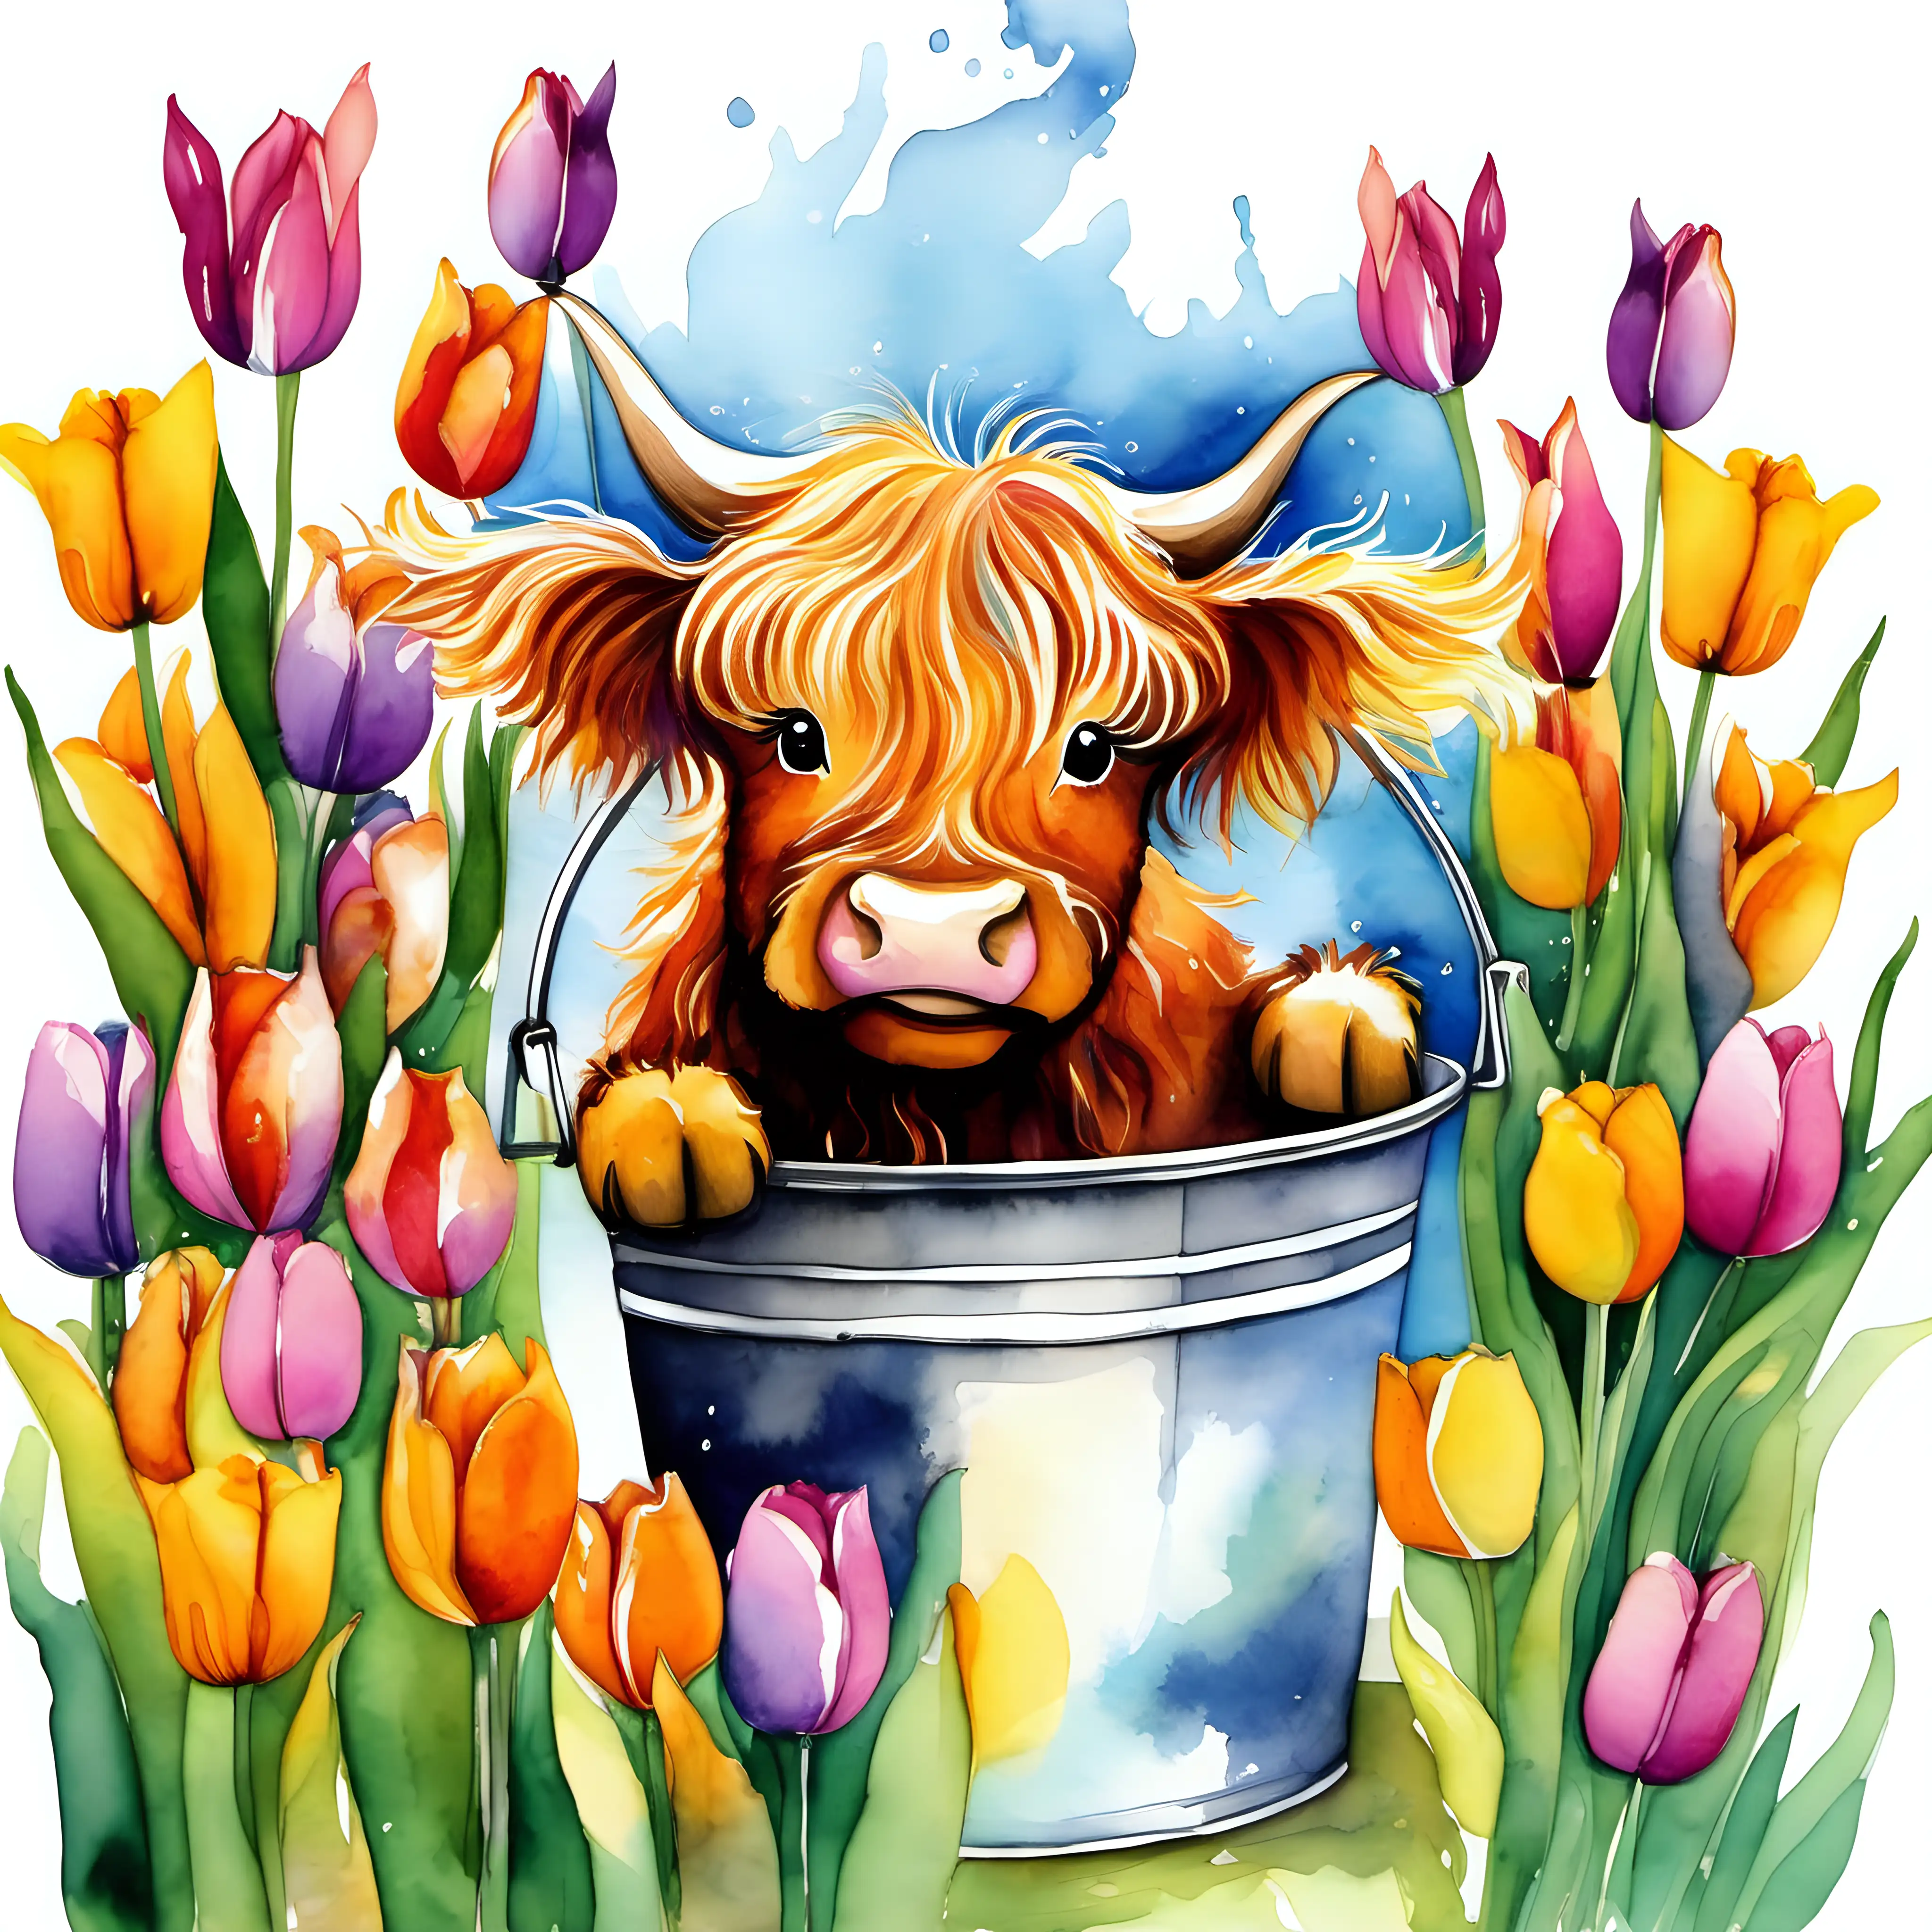 Playful Baby Highland Cow Frolicking in Vibrant Tulip Splash